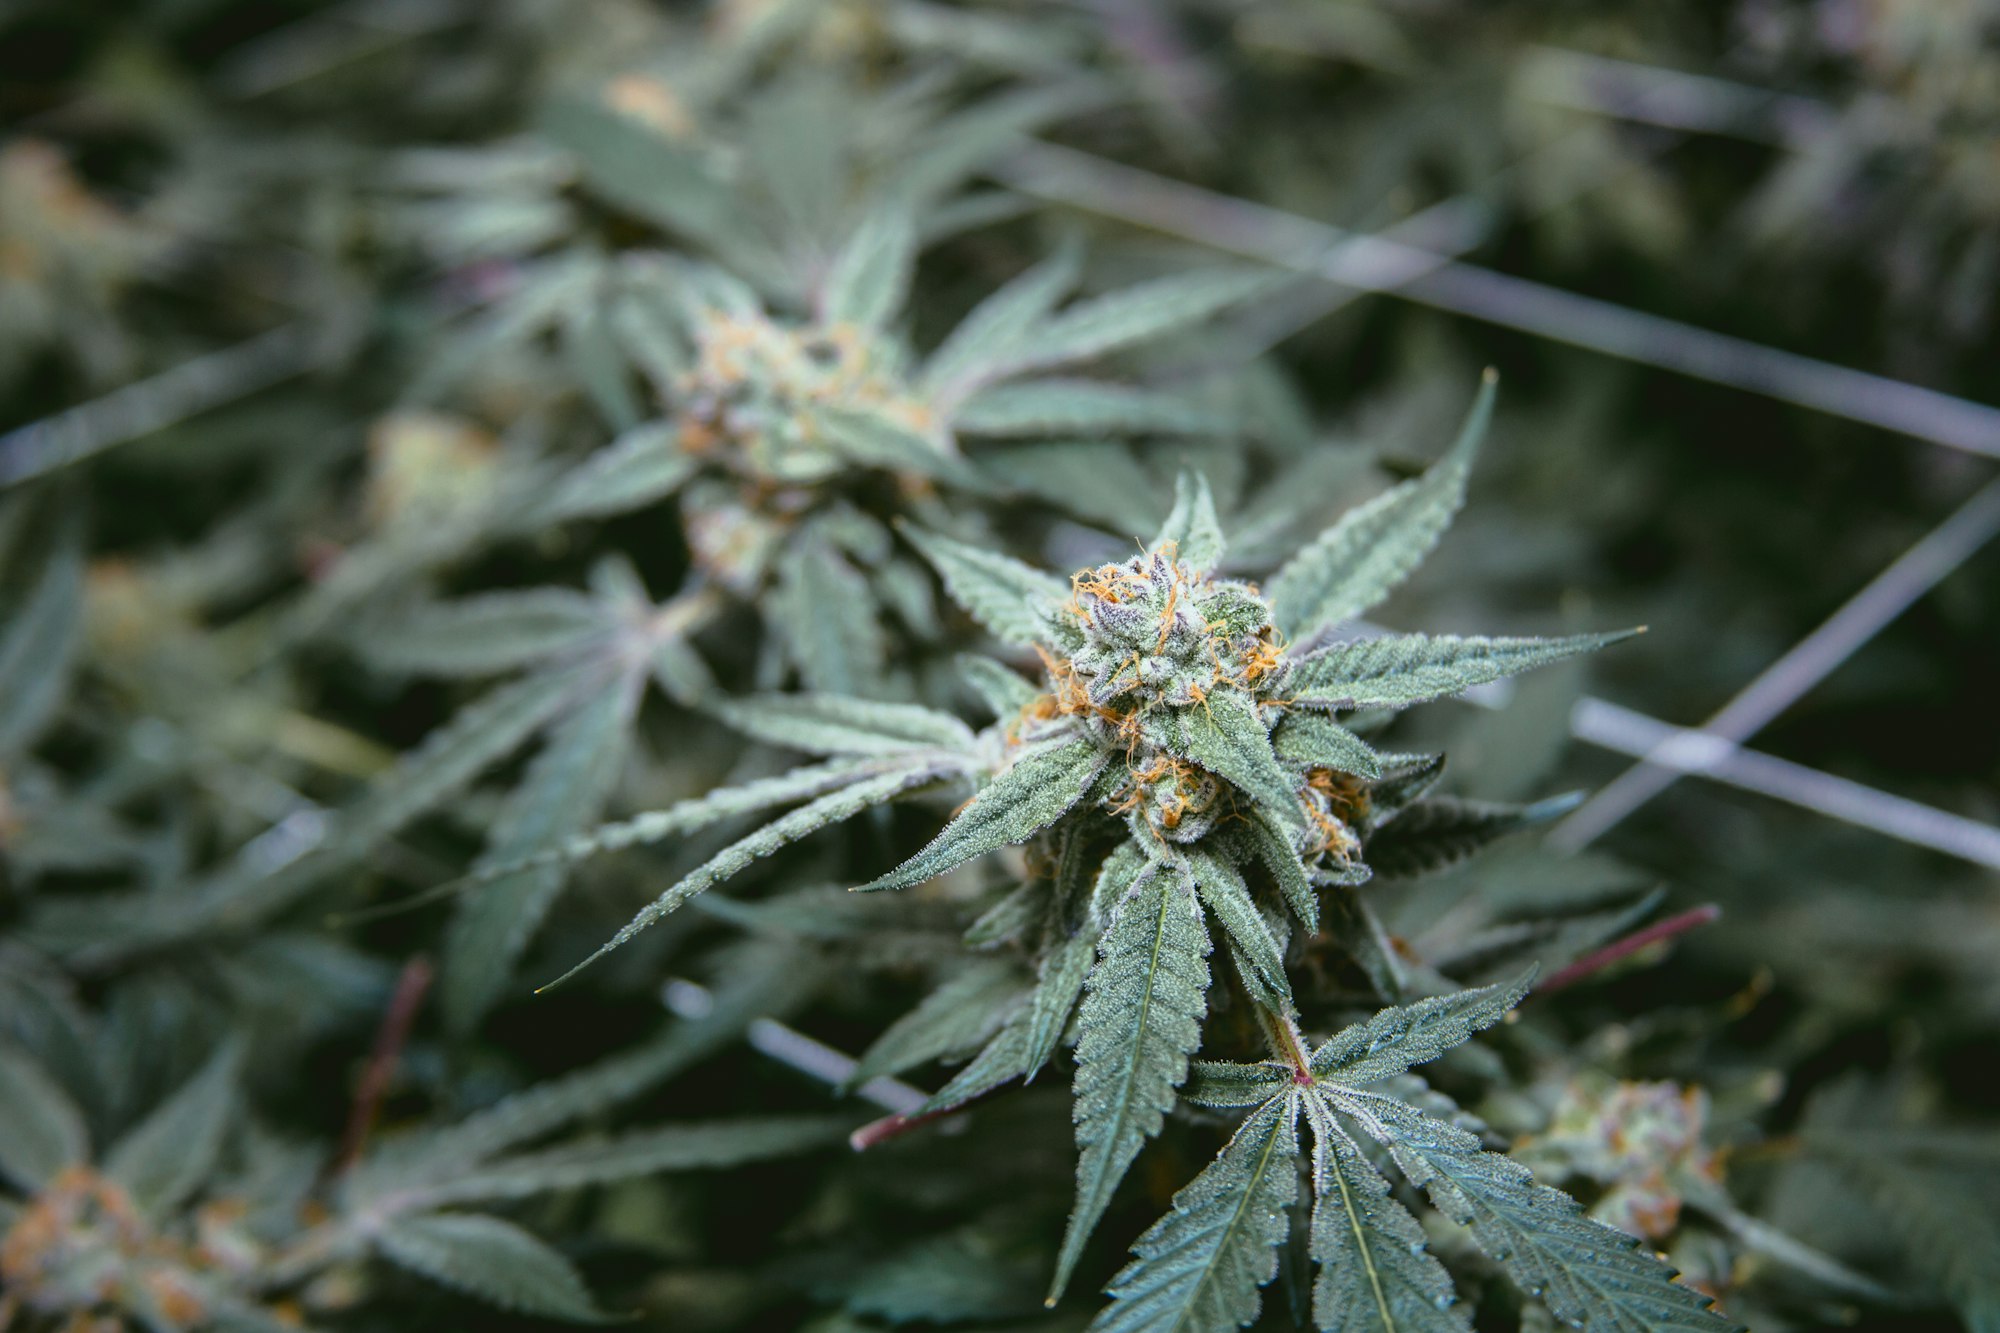 Where City Council landed on medical marijuana rules